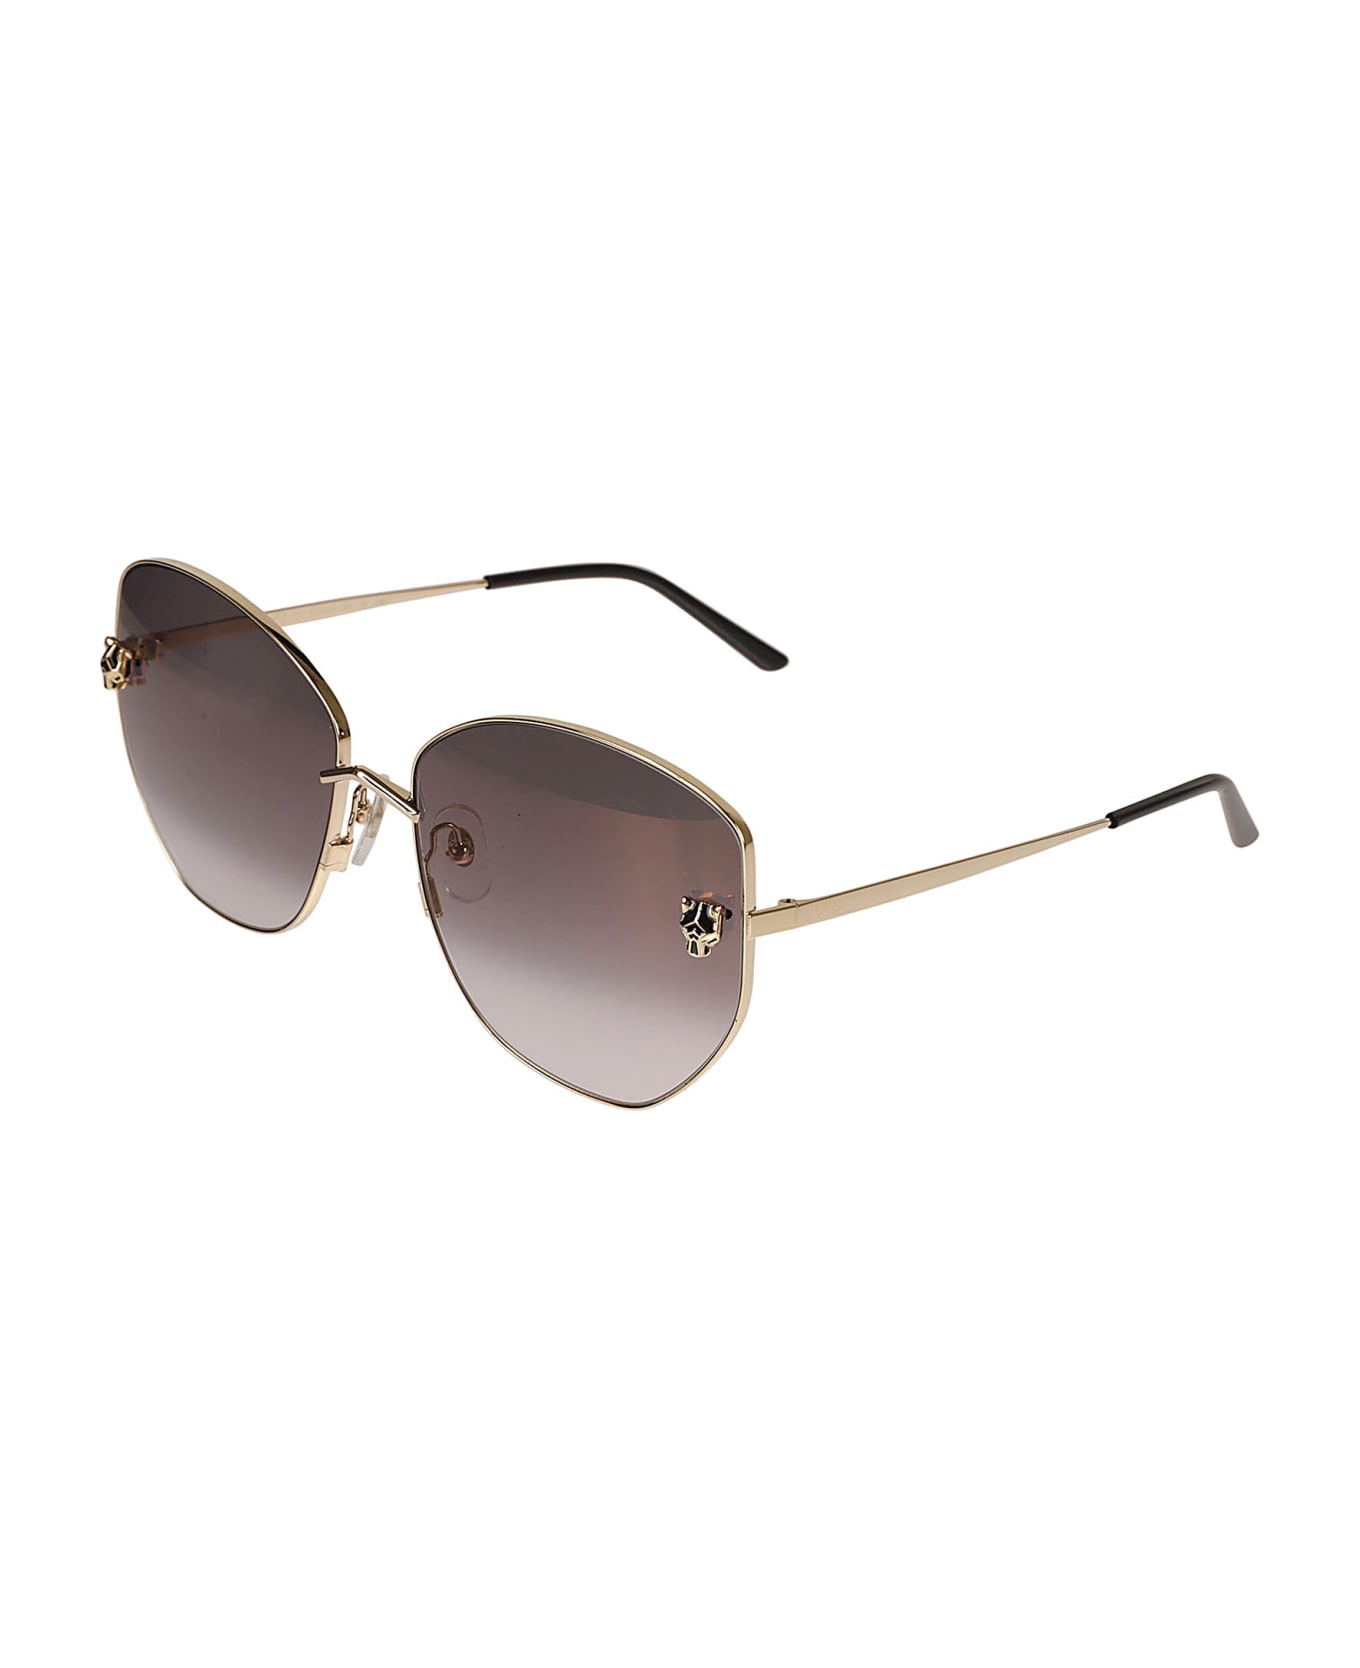 Cartier Eyewear Butterfly Sunglasses - 001 gold gold grey サングラス